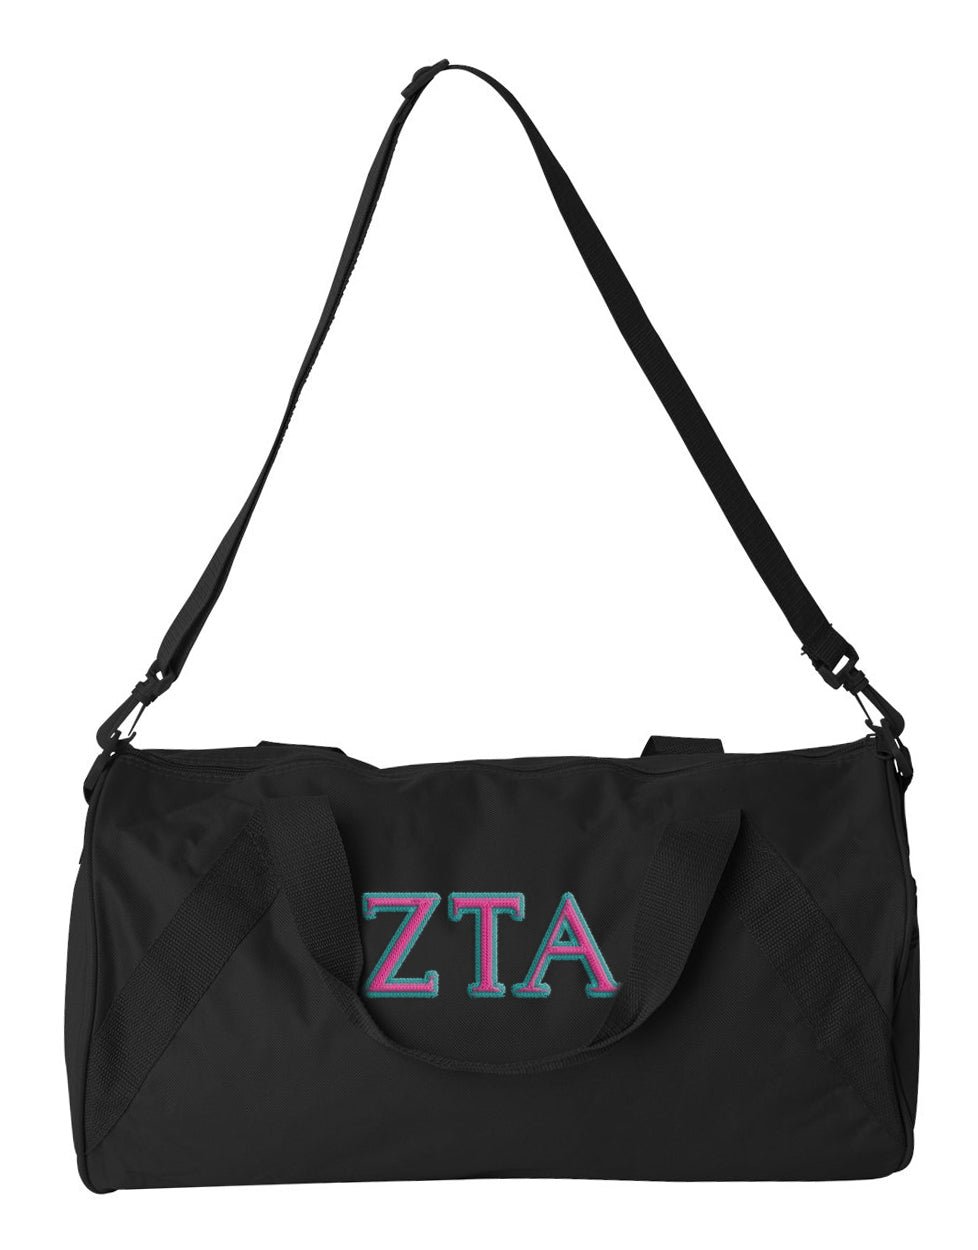 Zeta Tau Alpha Embroidered Duffel Bag